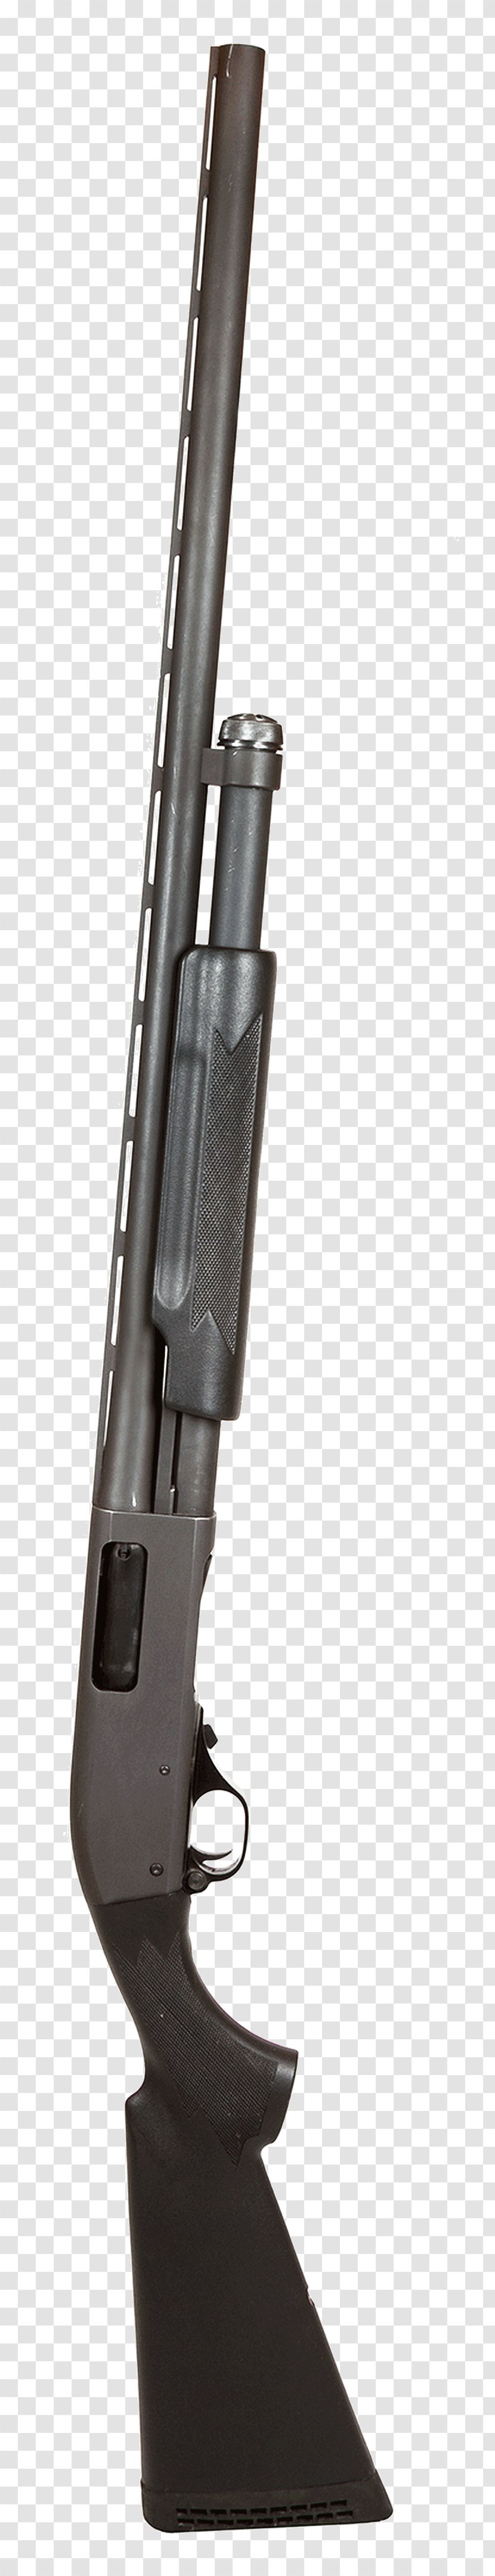 Shotgun Ranged Weapon Firearm - Flower - Modernization Transparent PNG